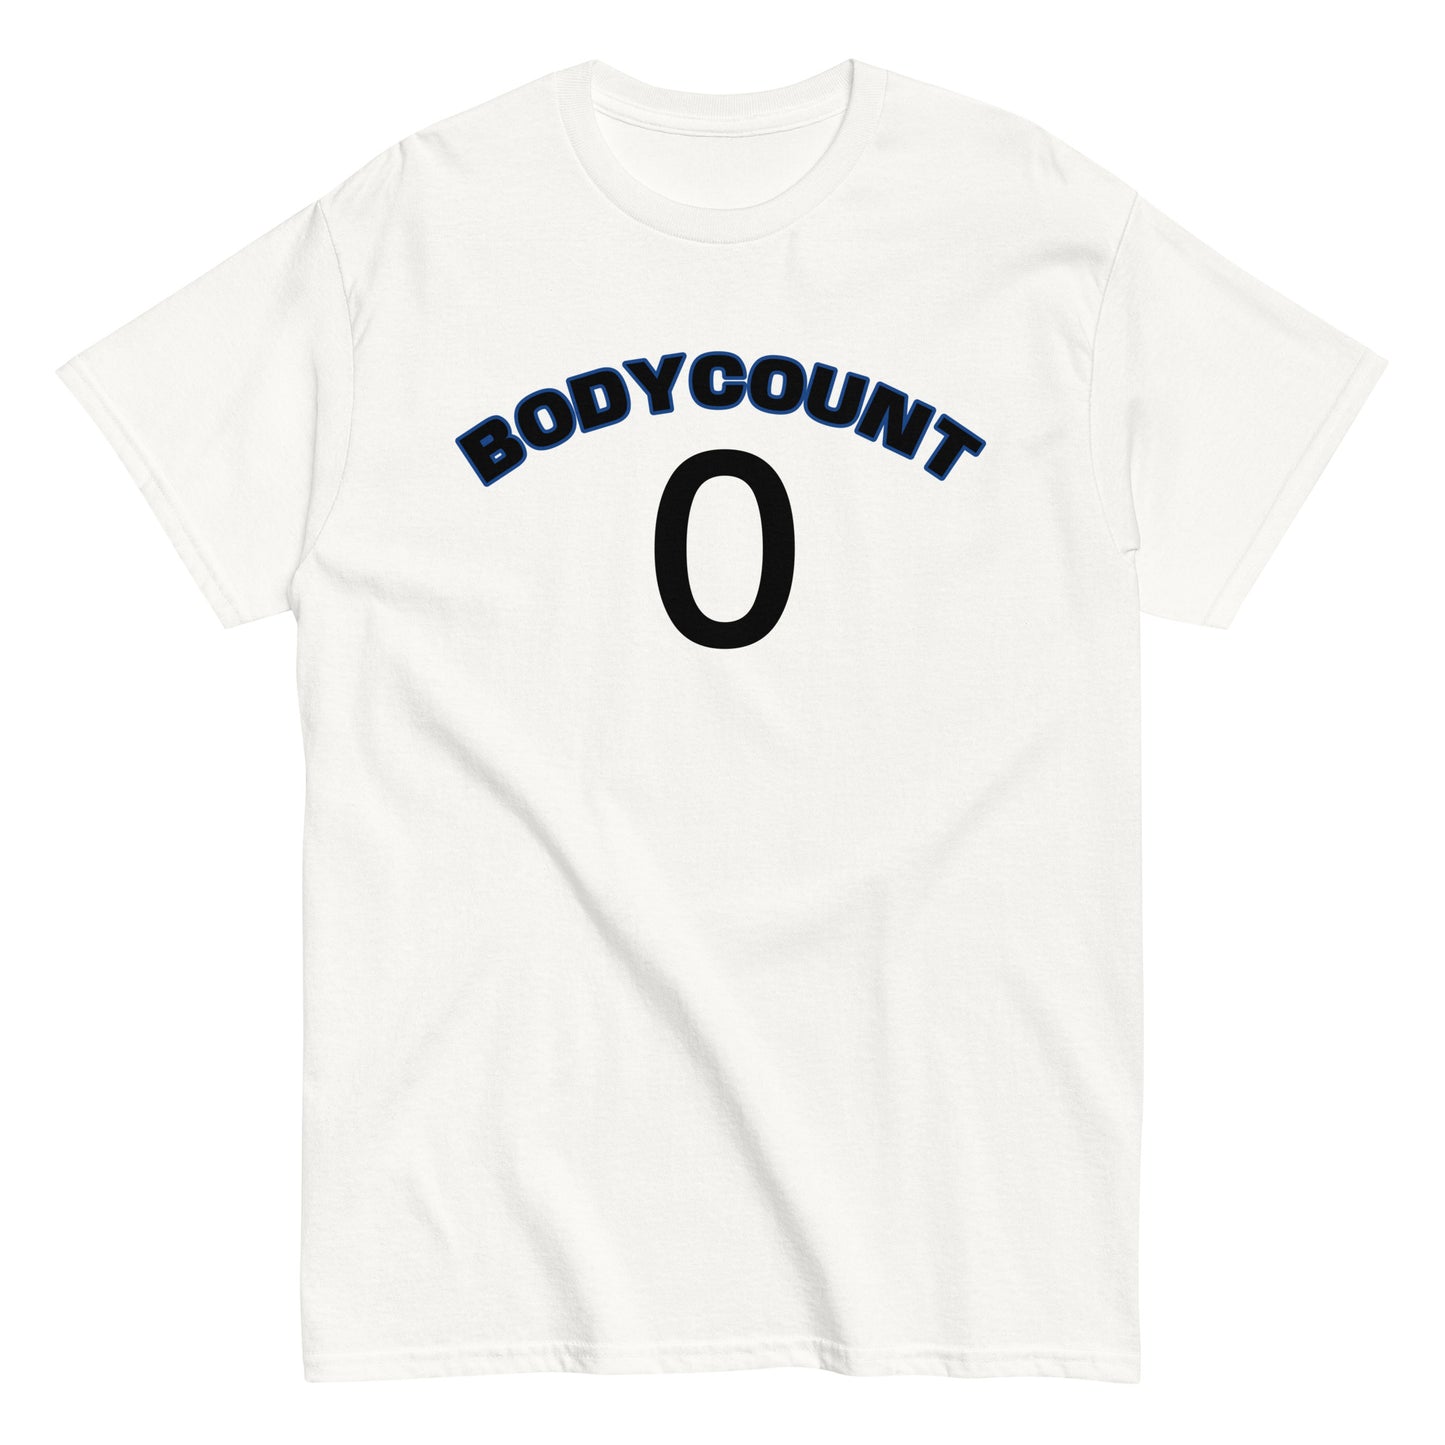 BODYCOUNT 0 T-Shirt